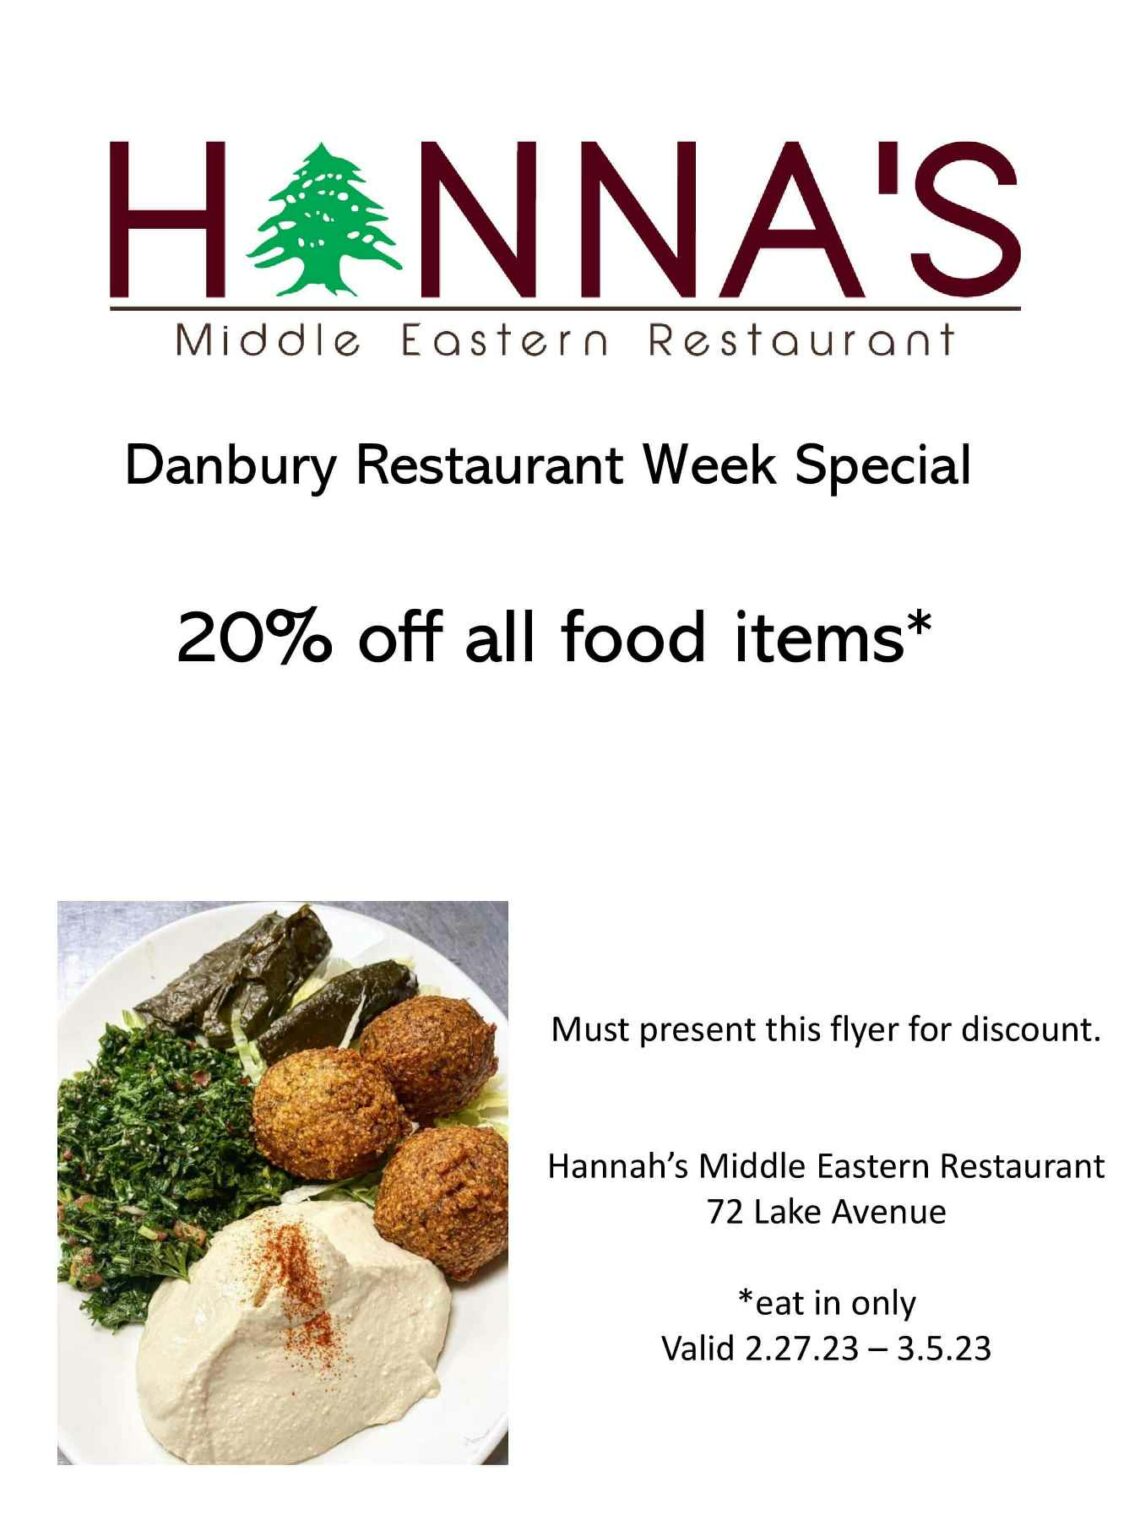 Hanna’s Middle Eastern Restaurant Danbury Restaurant Week